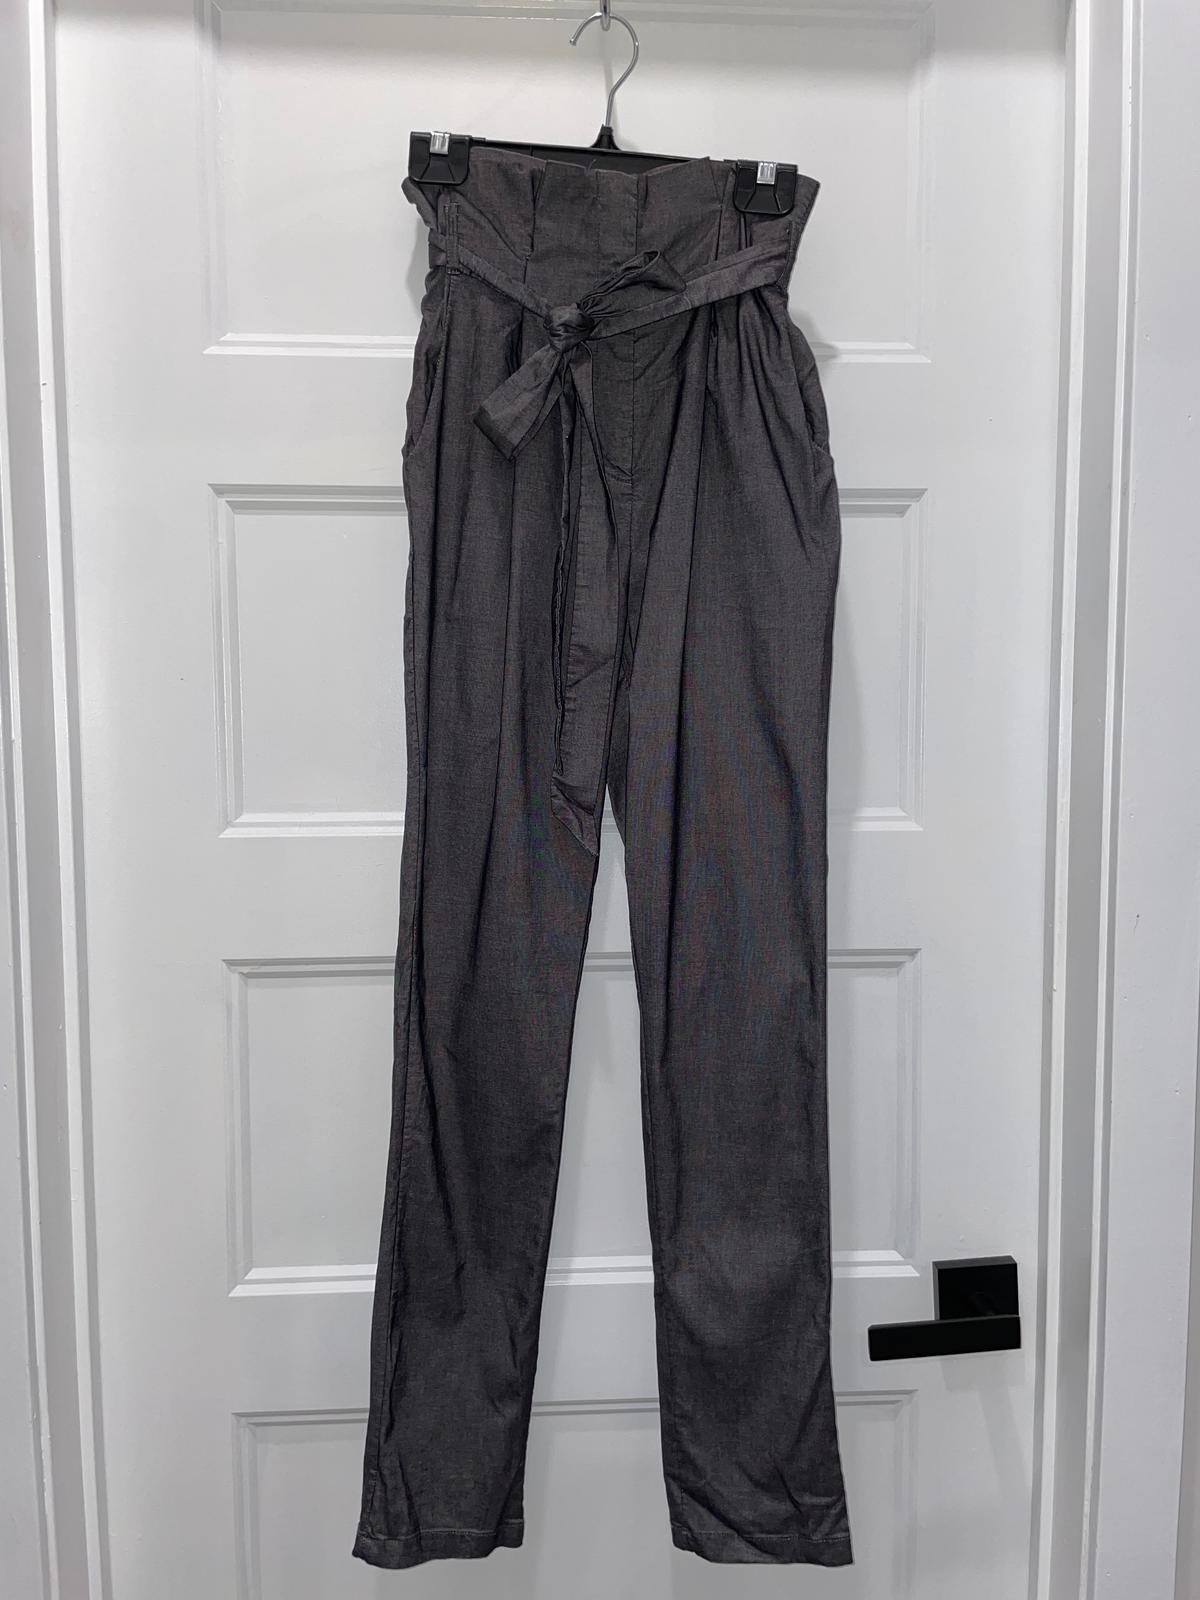 Photo of Pantalon gris taille haute